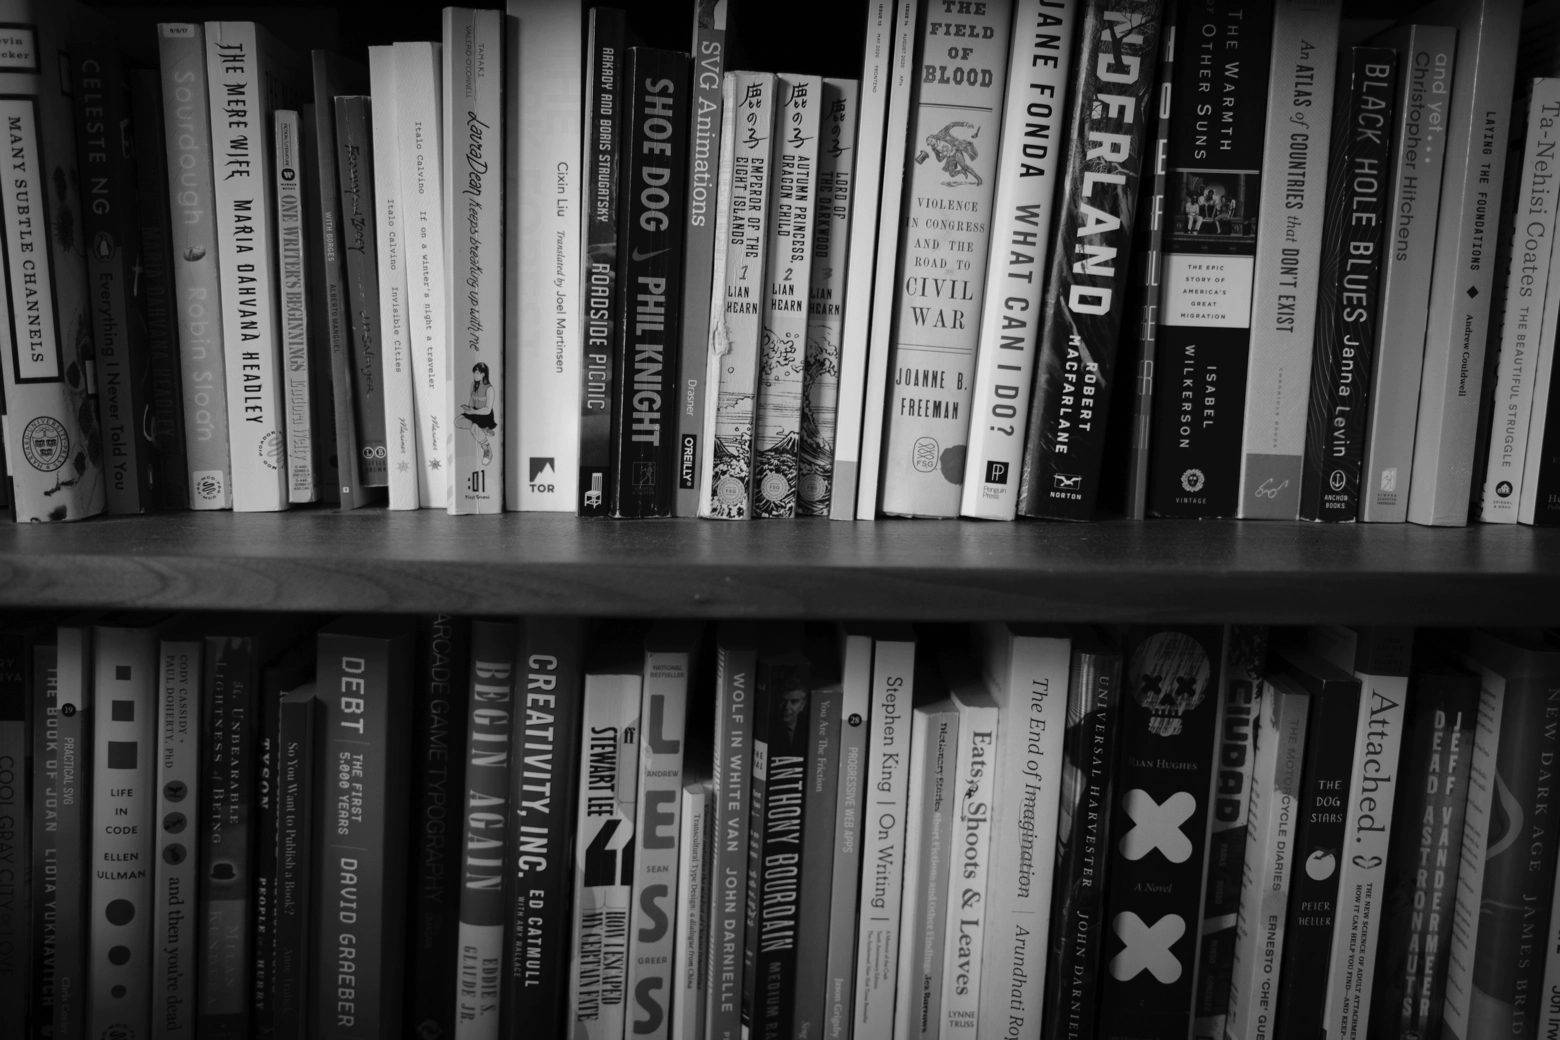 A bookshelf.